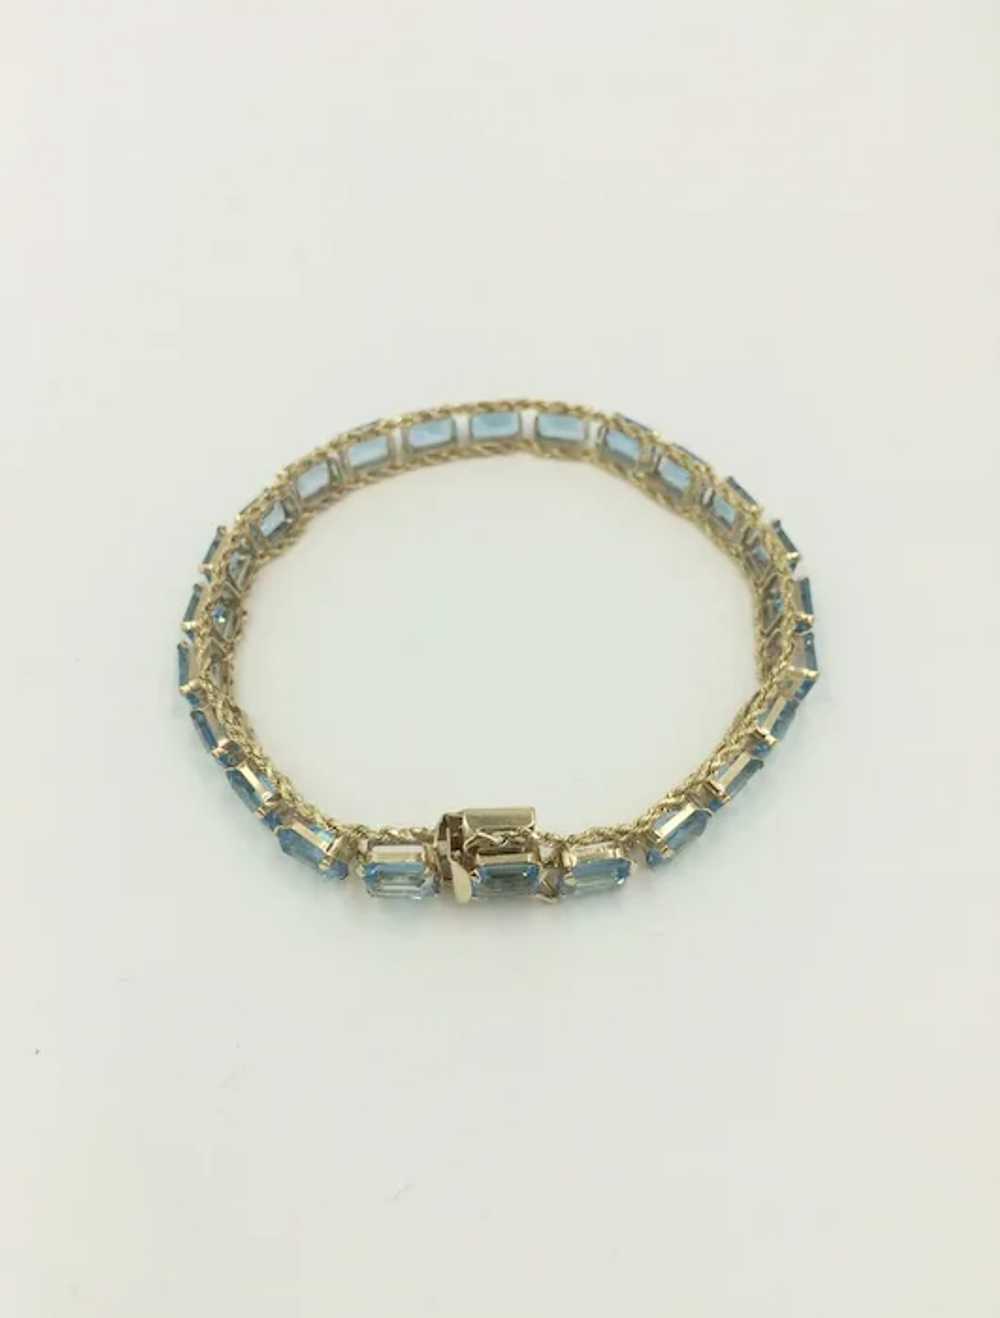 10K Gold Blue Topaz Gemstone Rope Chain Bracelet - image 6